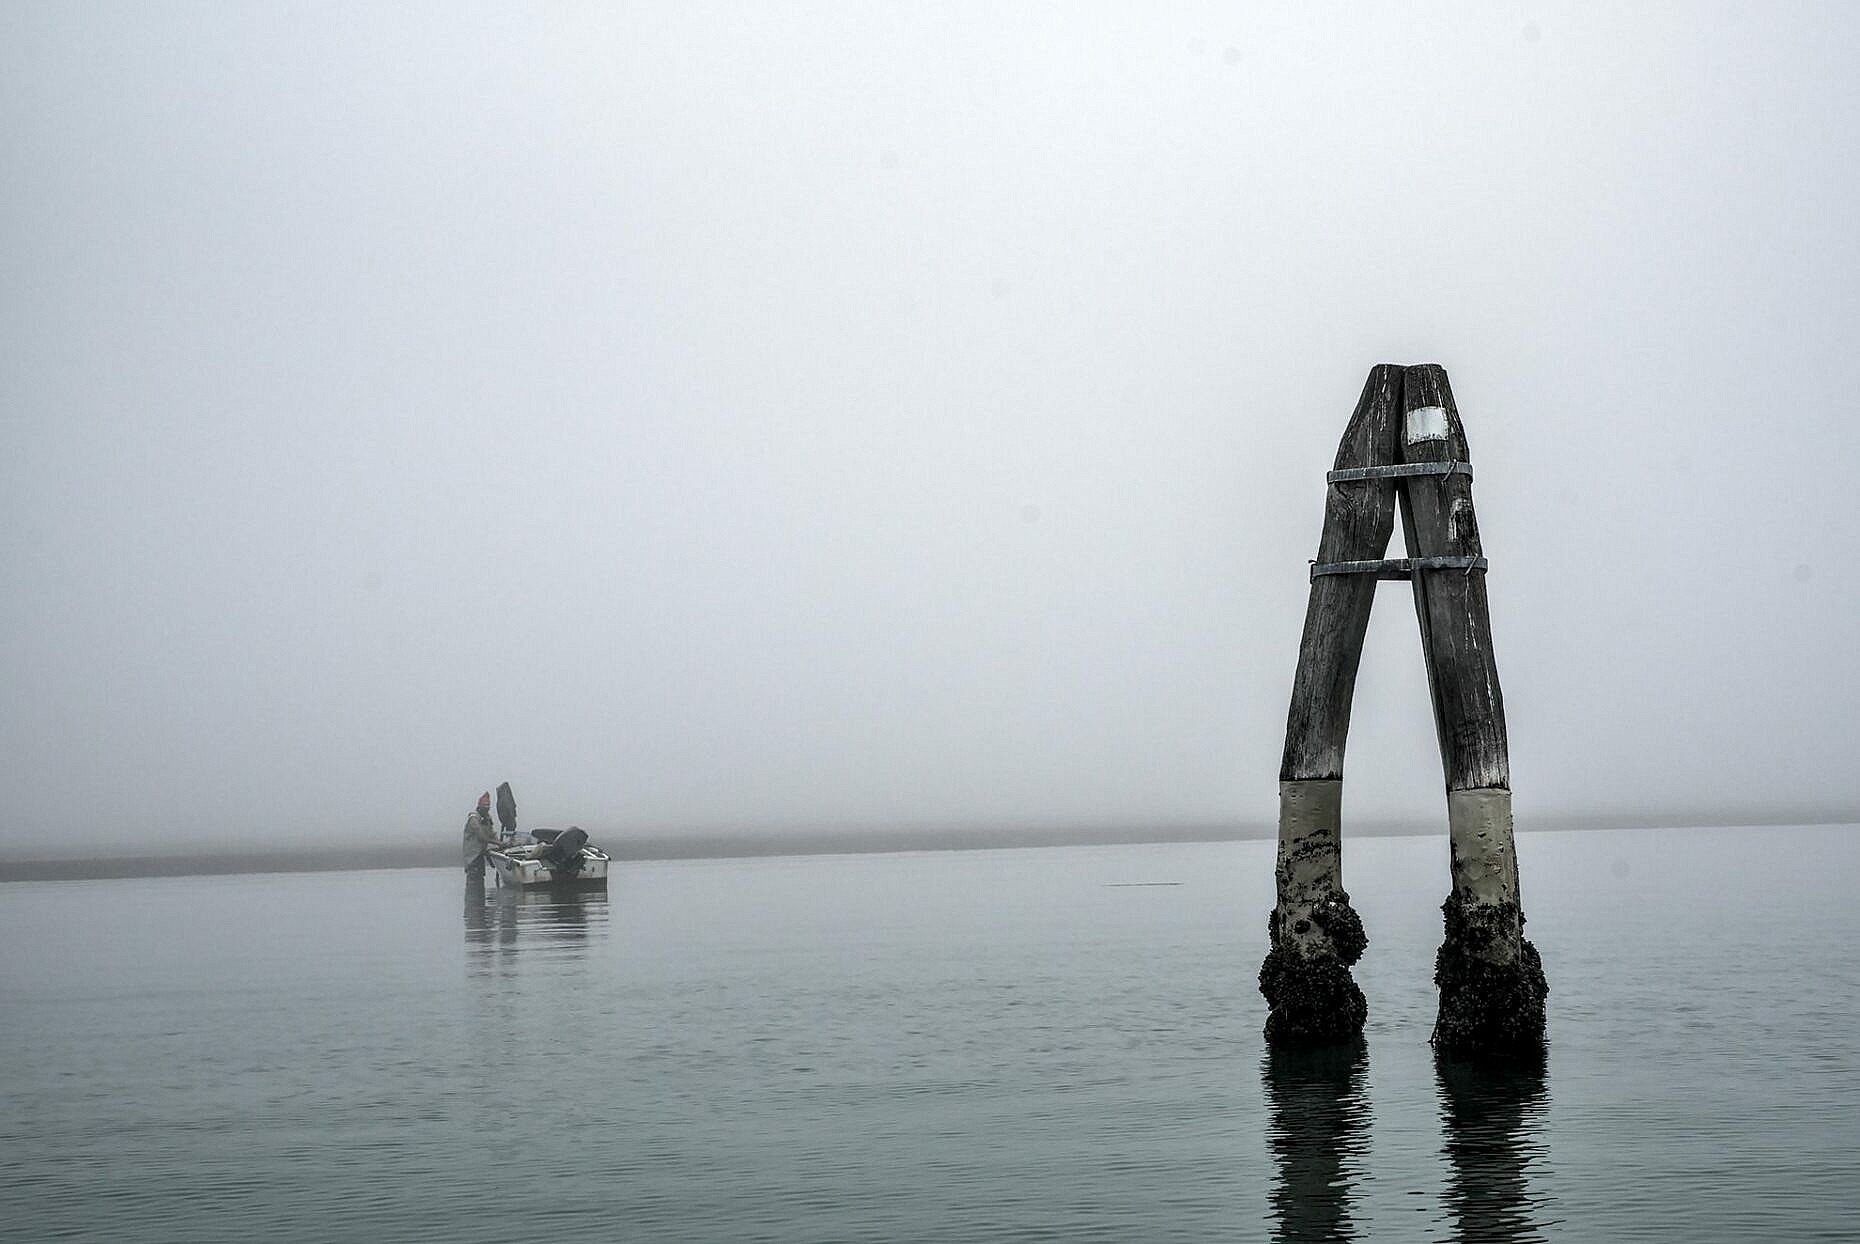 The Venetian lagoon on the fog - fisherman